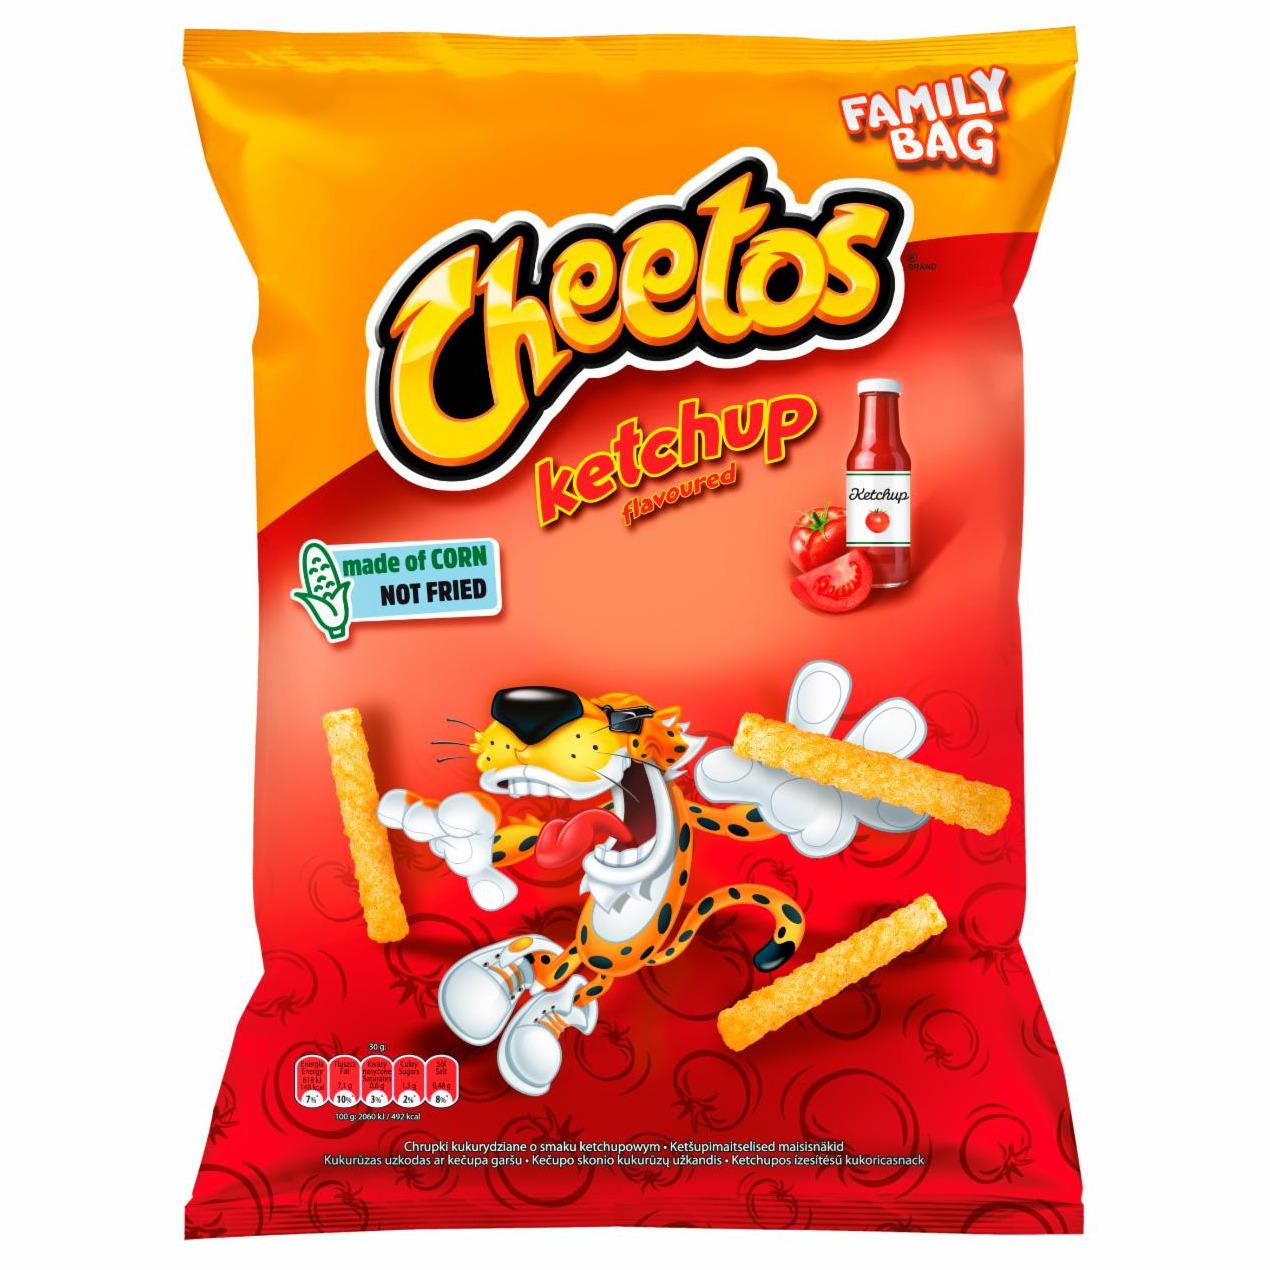 Zdjęcia - Cheetos Chrupki kukurydziane o smaku ketchupowym 150 g